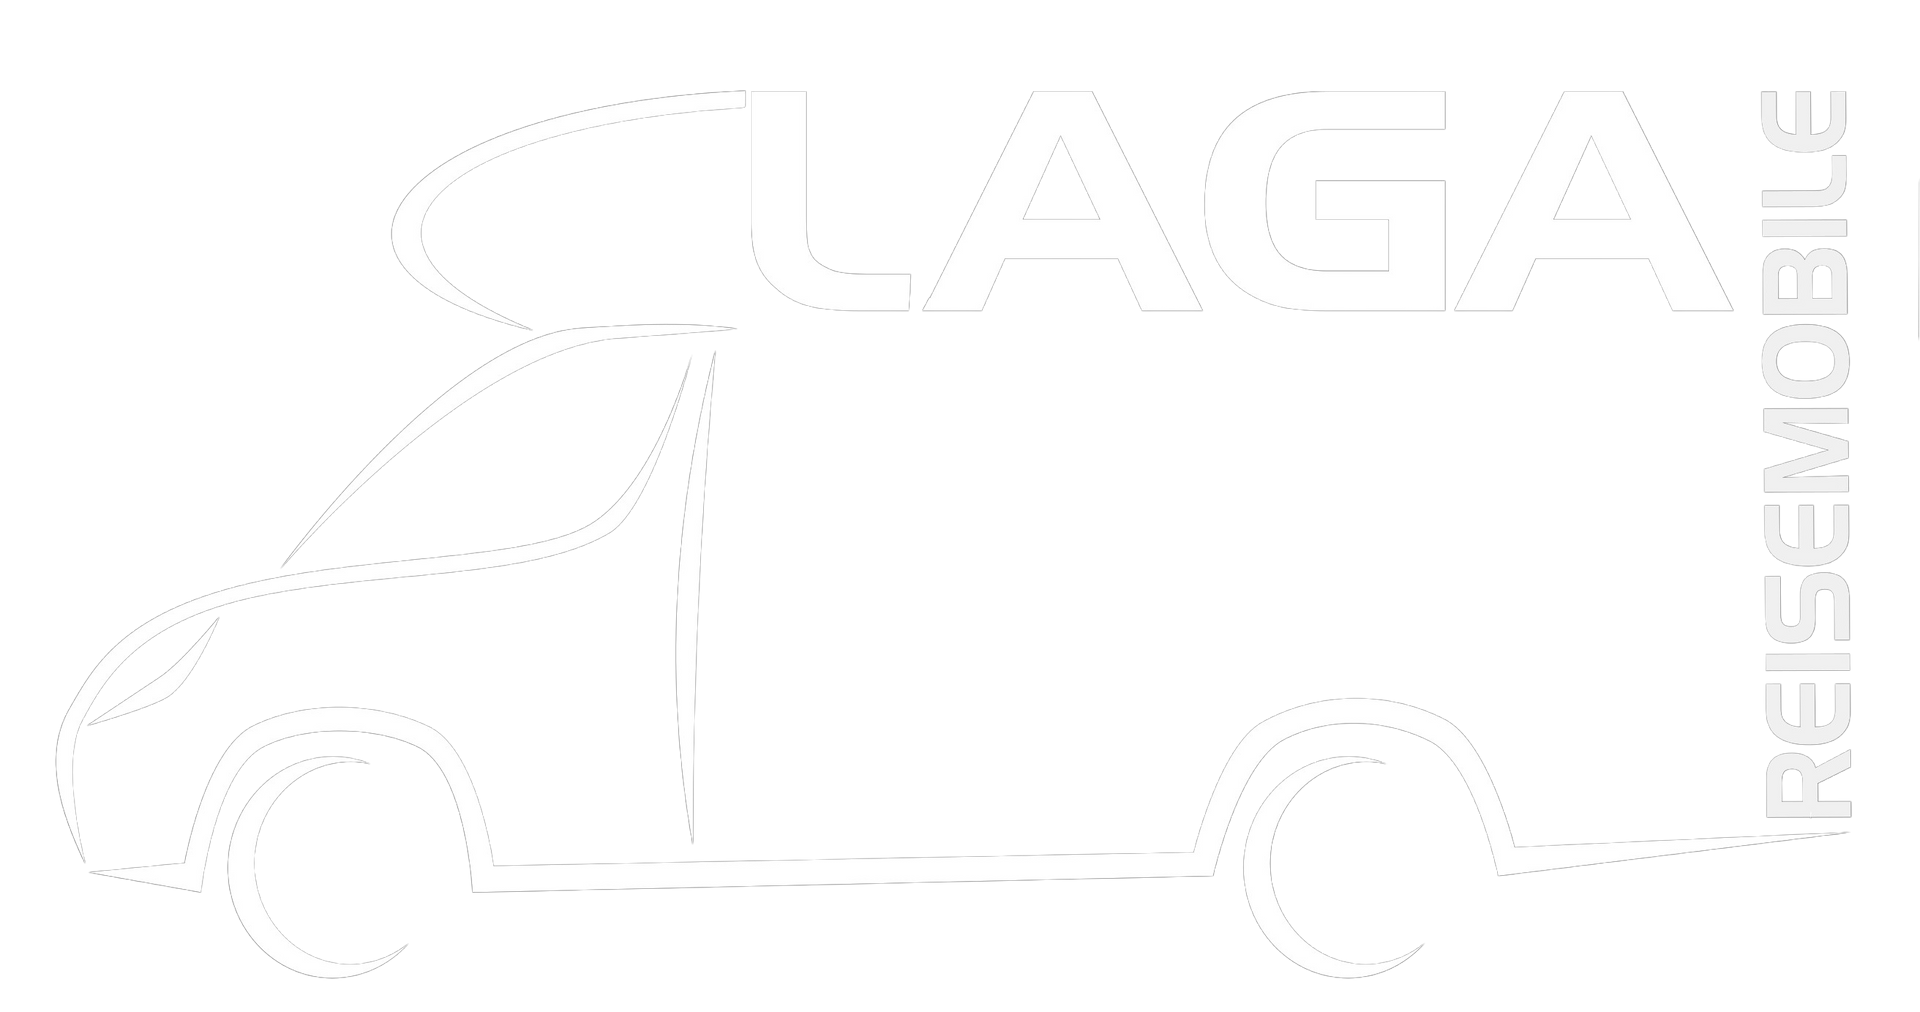 Laga Reisemobile Logo